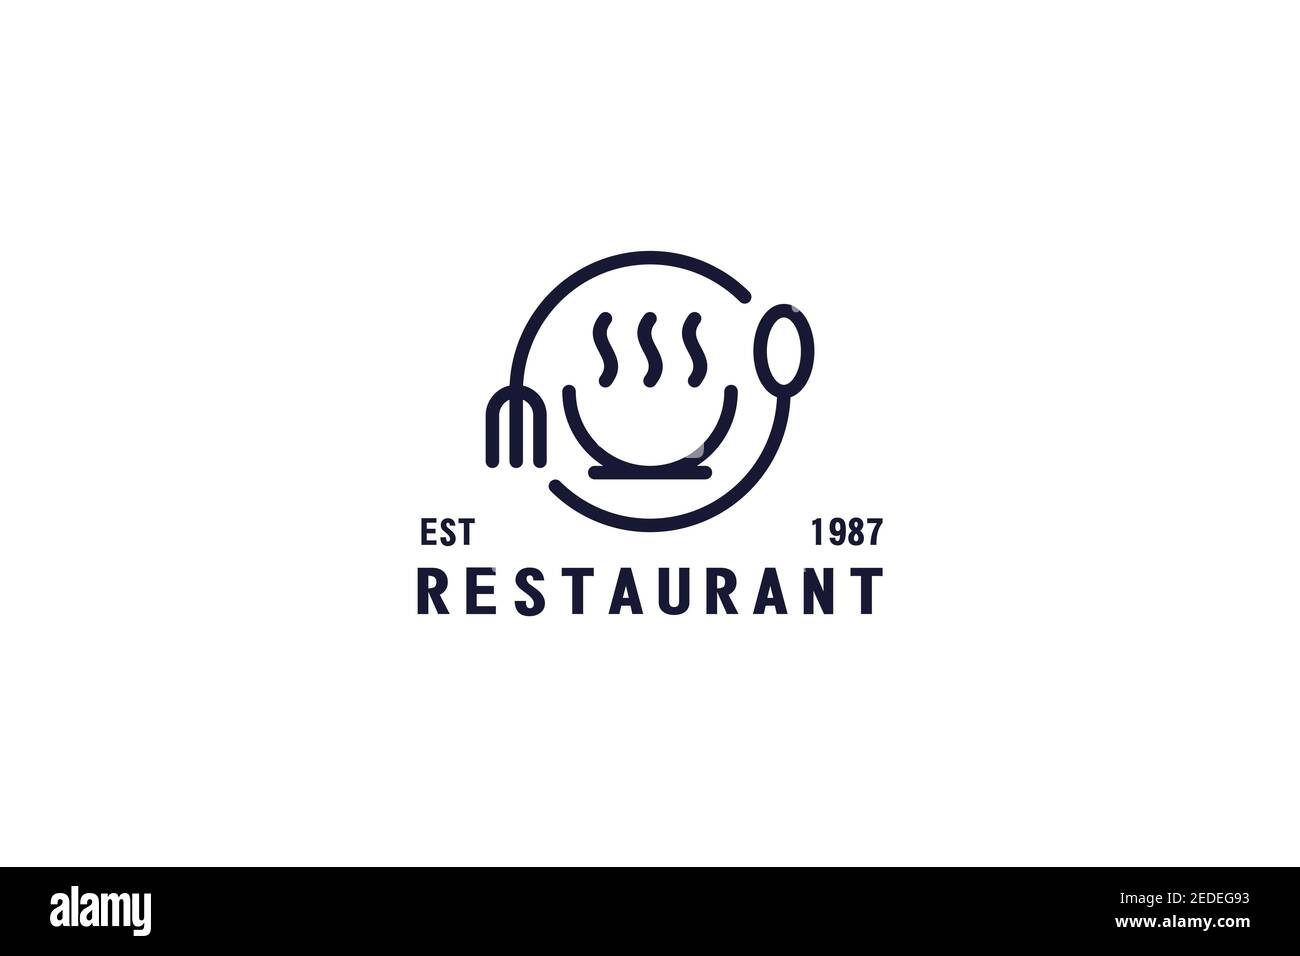 Vintage restaurant logo Stock Vector